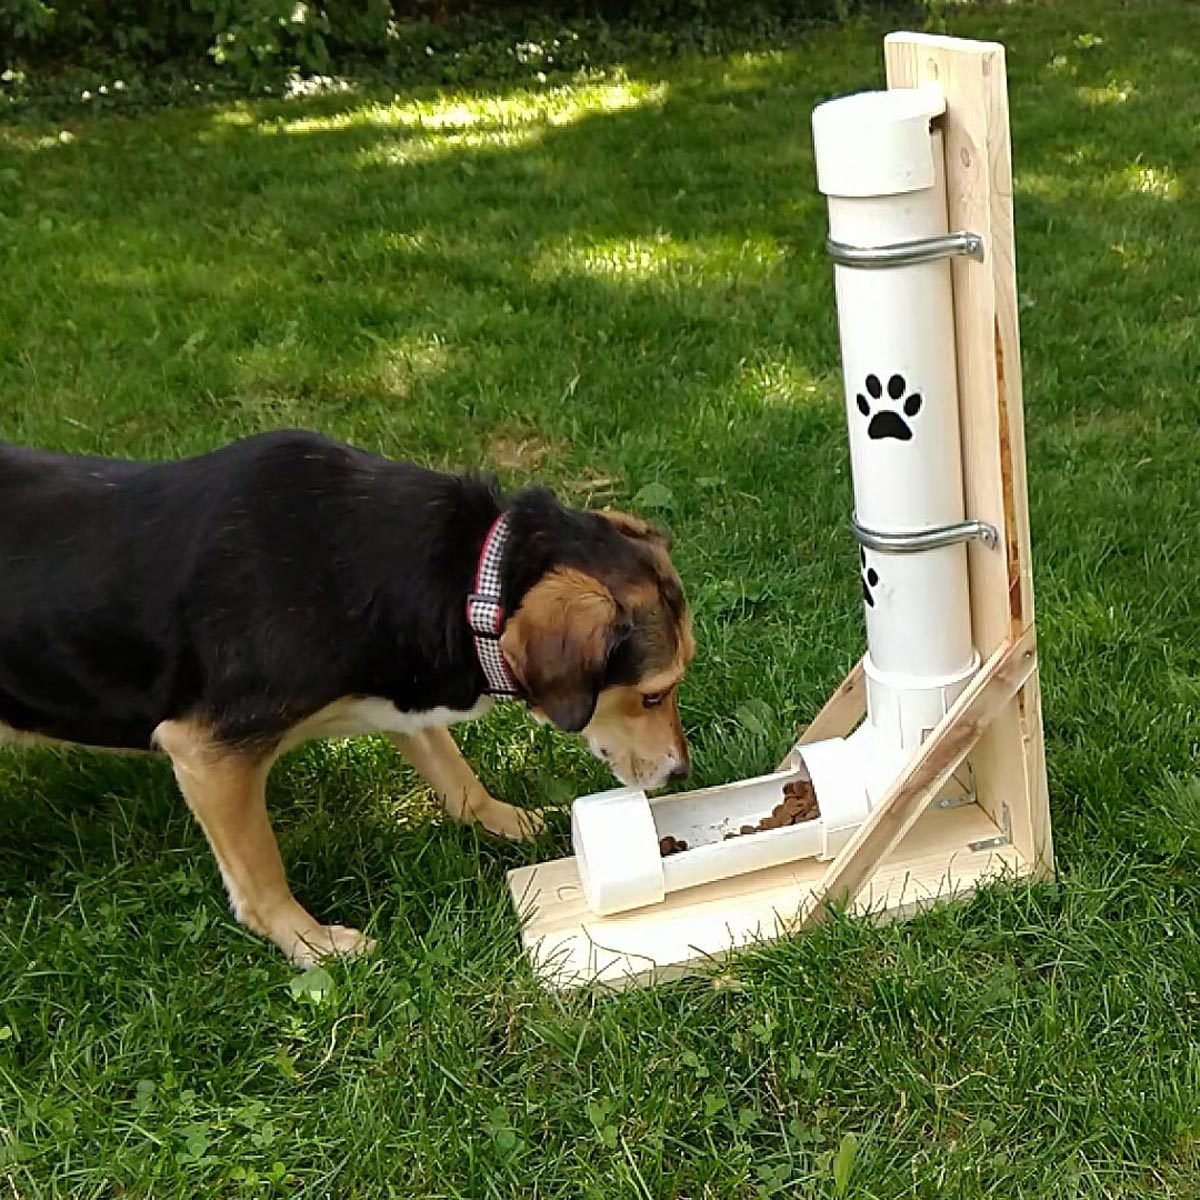 How to Make a DIY Automatic Dog Feeder